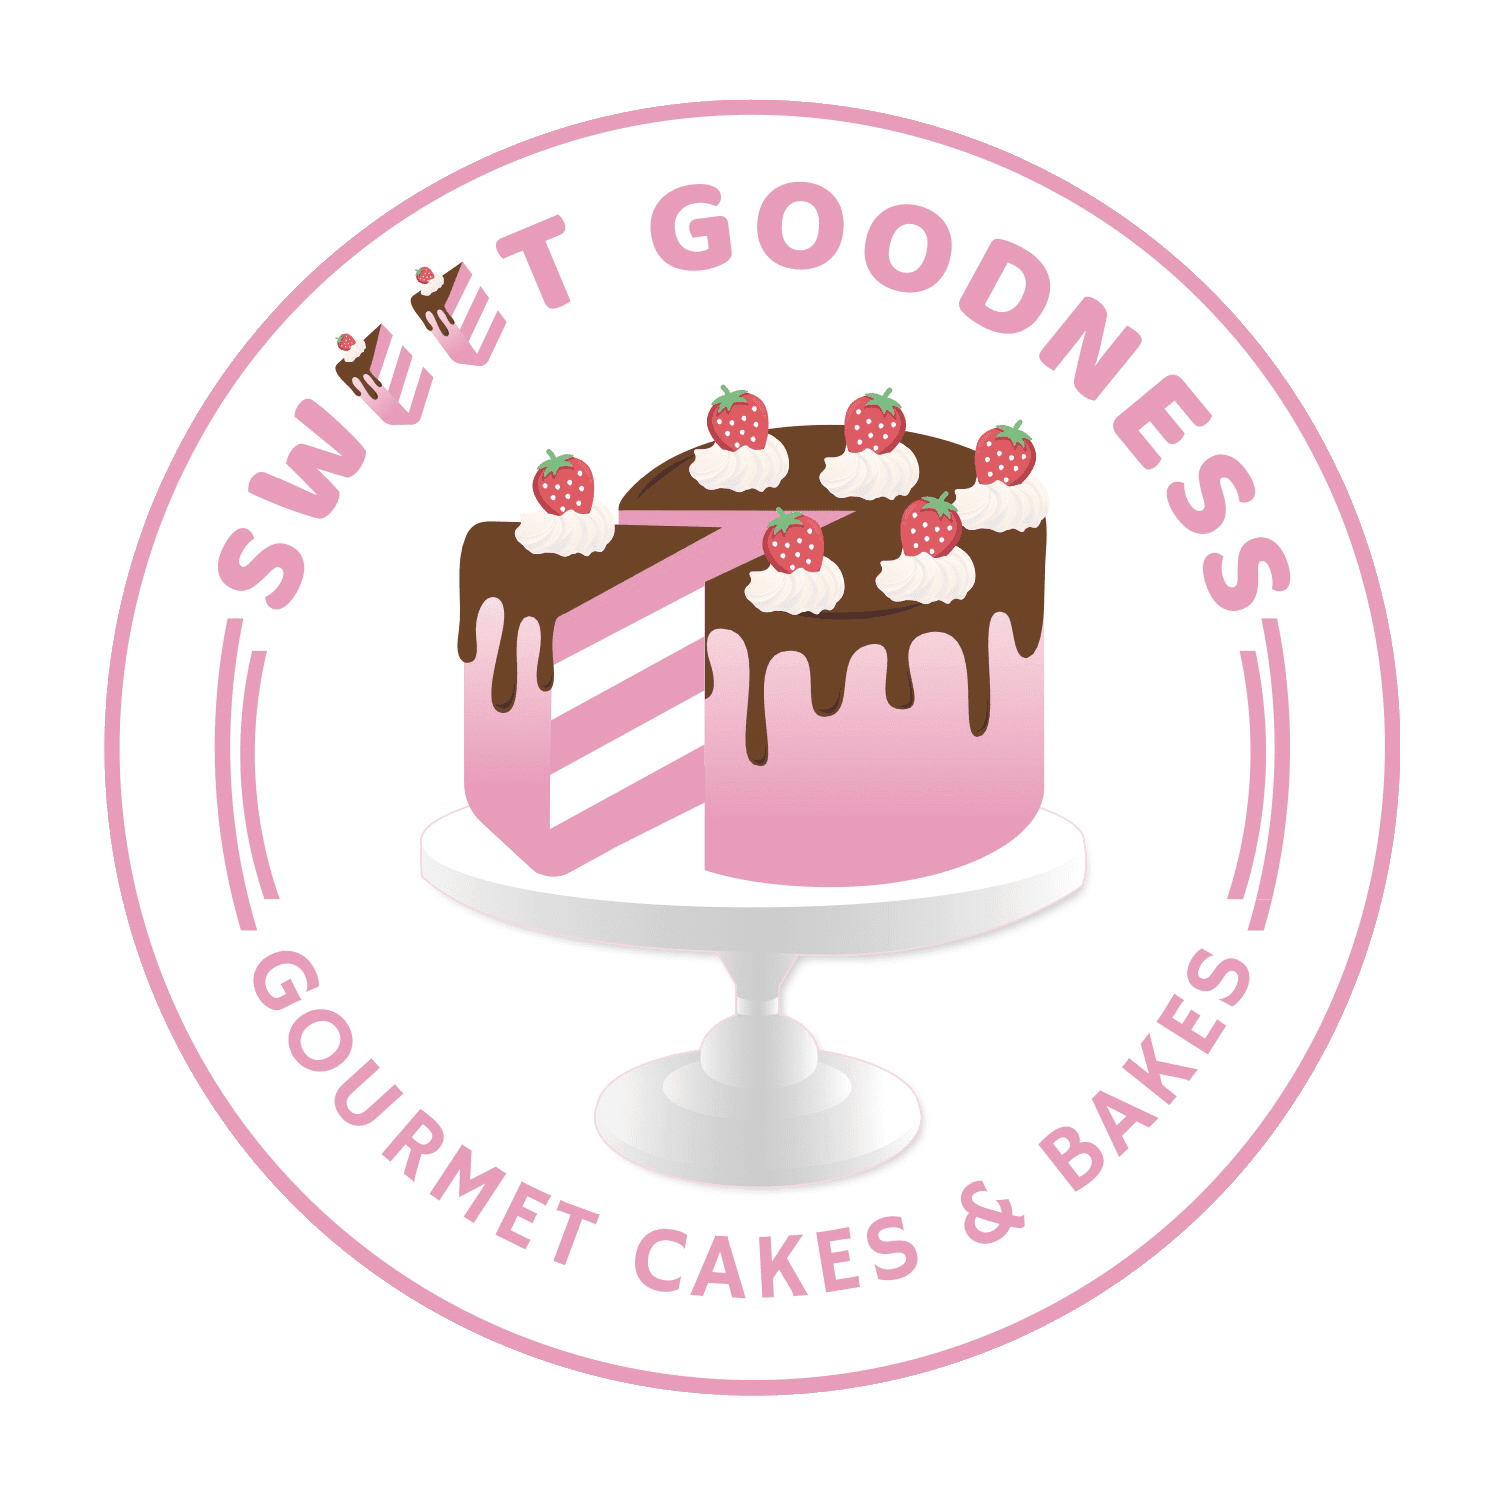 SWEET GOODNESS  CAKES & BAKES